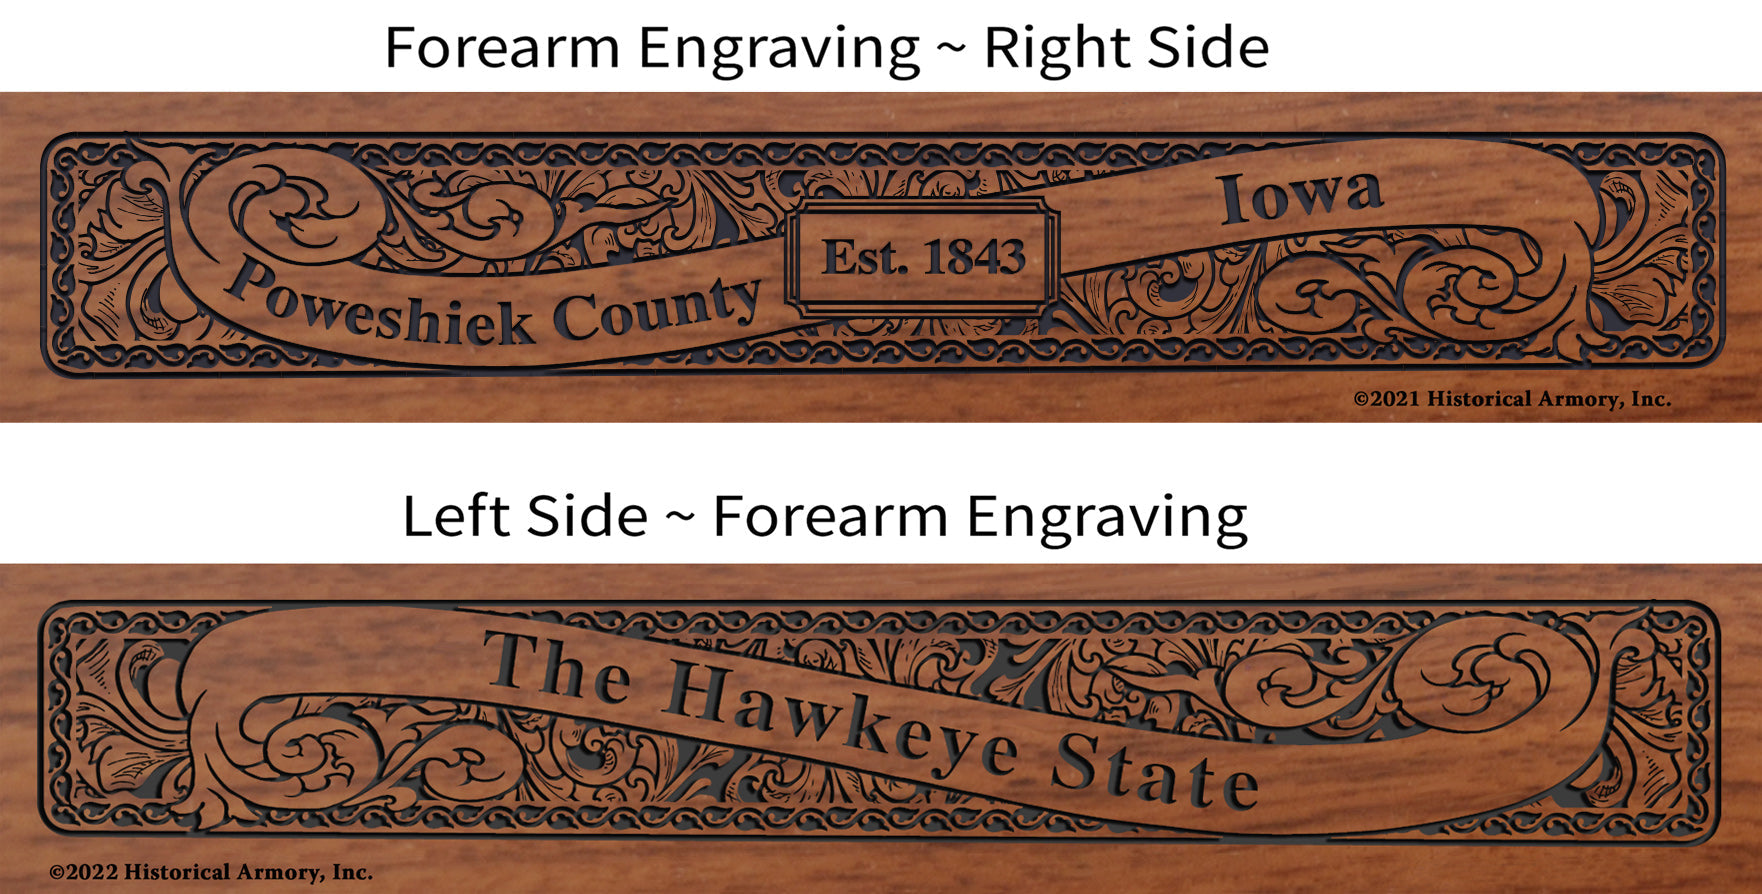 Poweshiek County Iowa Engraved Rifle Forearm